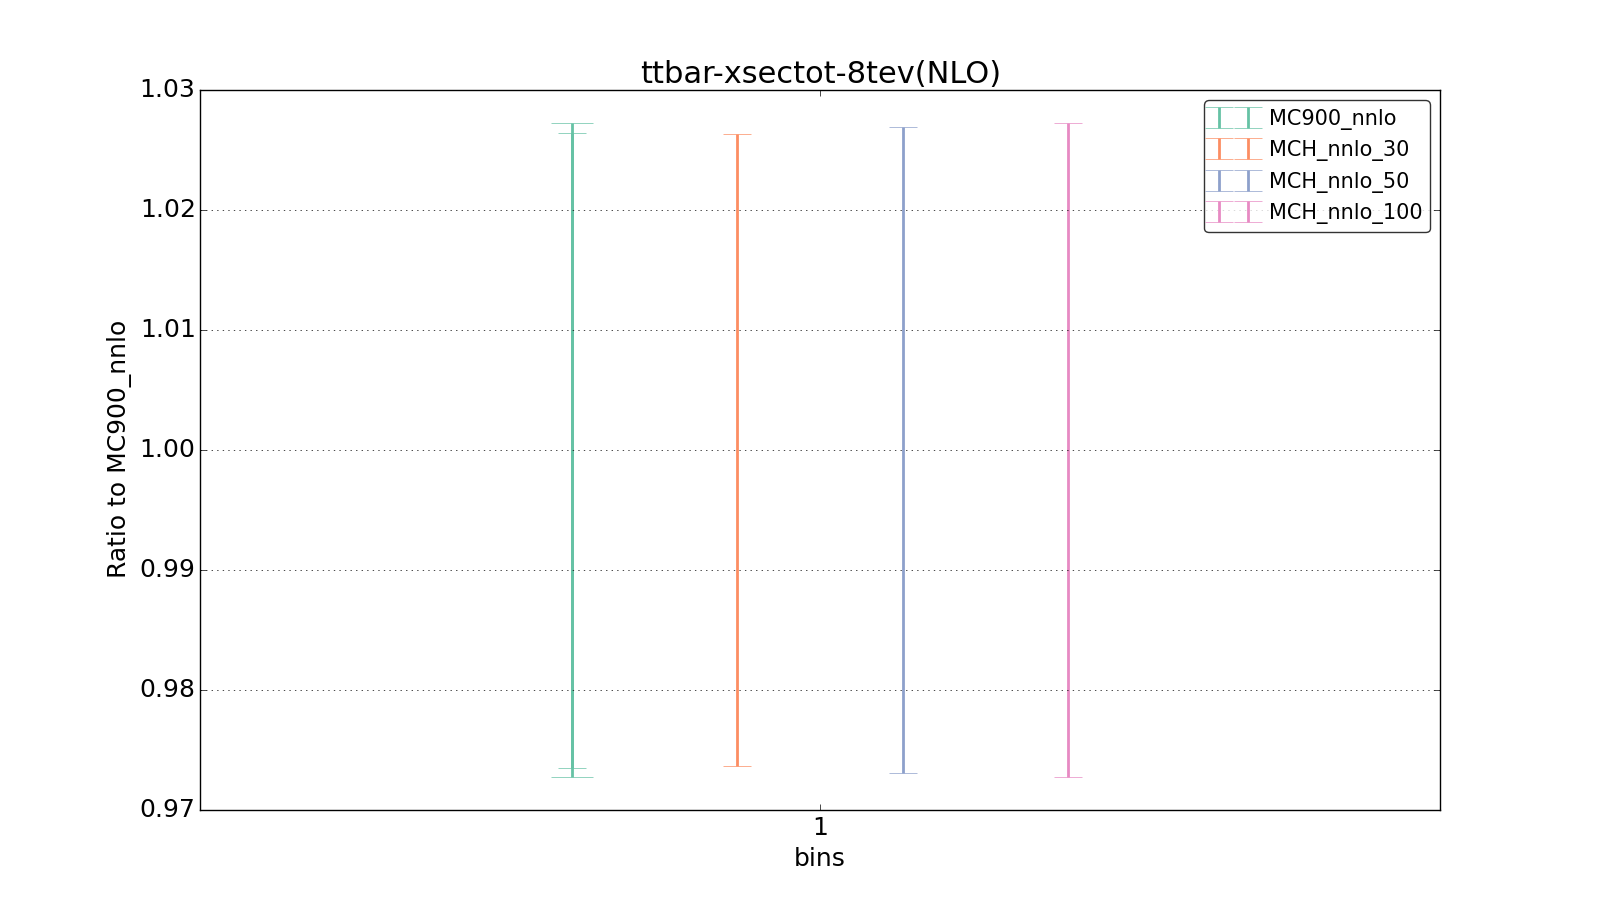 figure plots/pheno_new/NNLO/ciplot_ttbar-xsectot-8tev(NLO).png